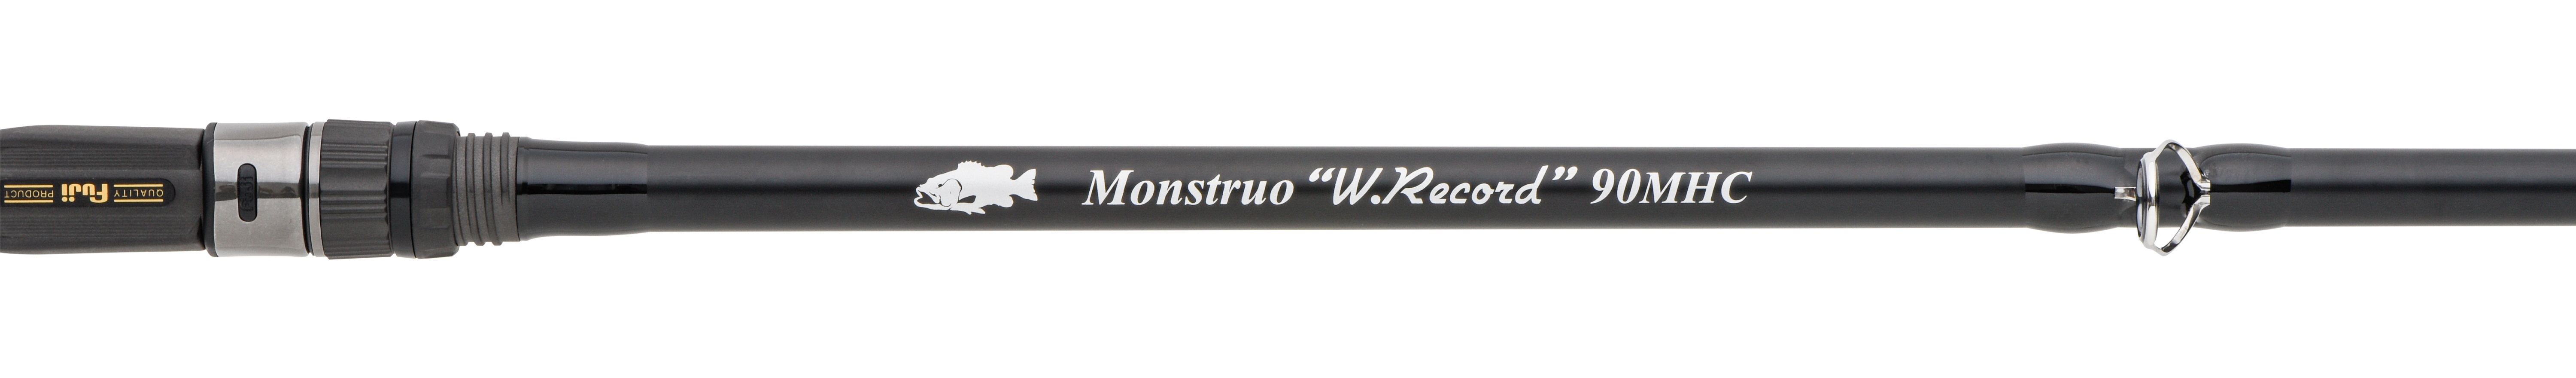 Monstruo”W.Record”90MHC | ロゴ